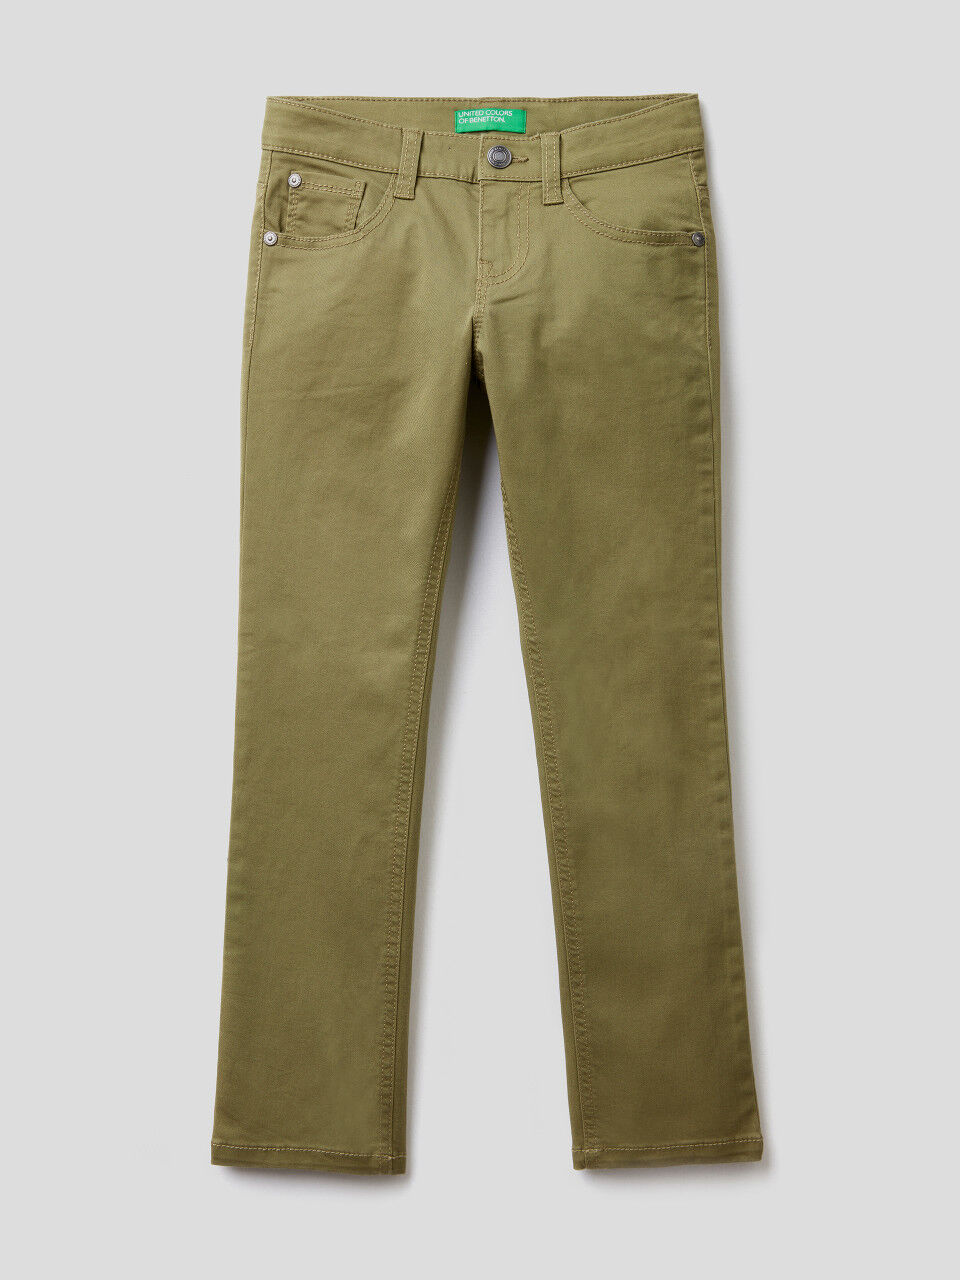 discount 90% Pink 7Y KIDS FASHION Trousers Casual Benetton slacks 